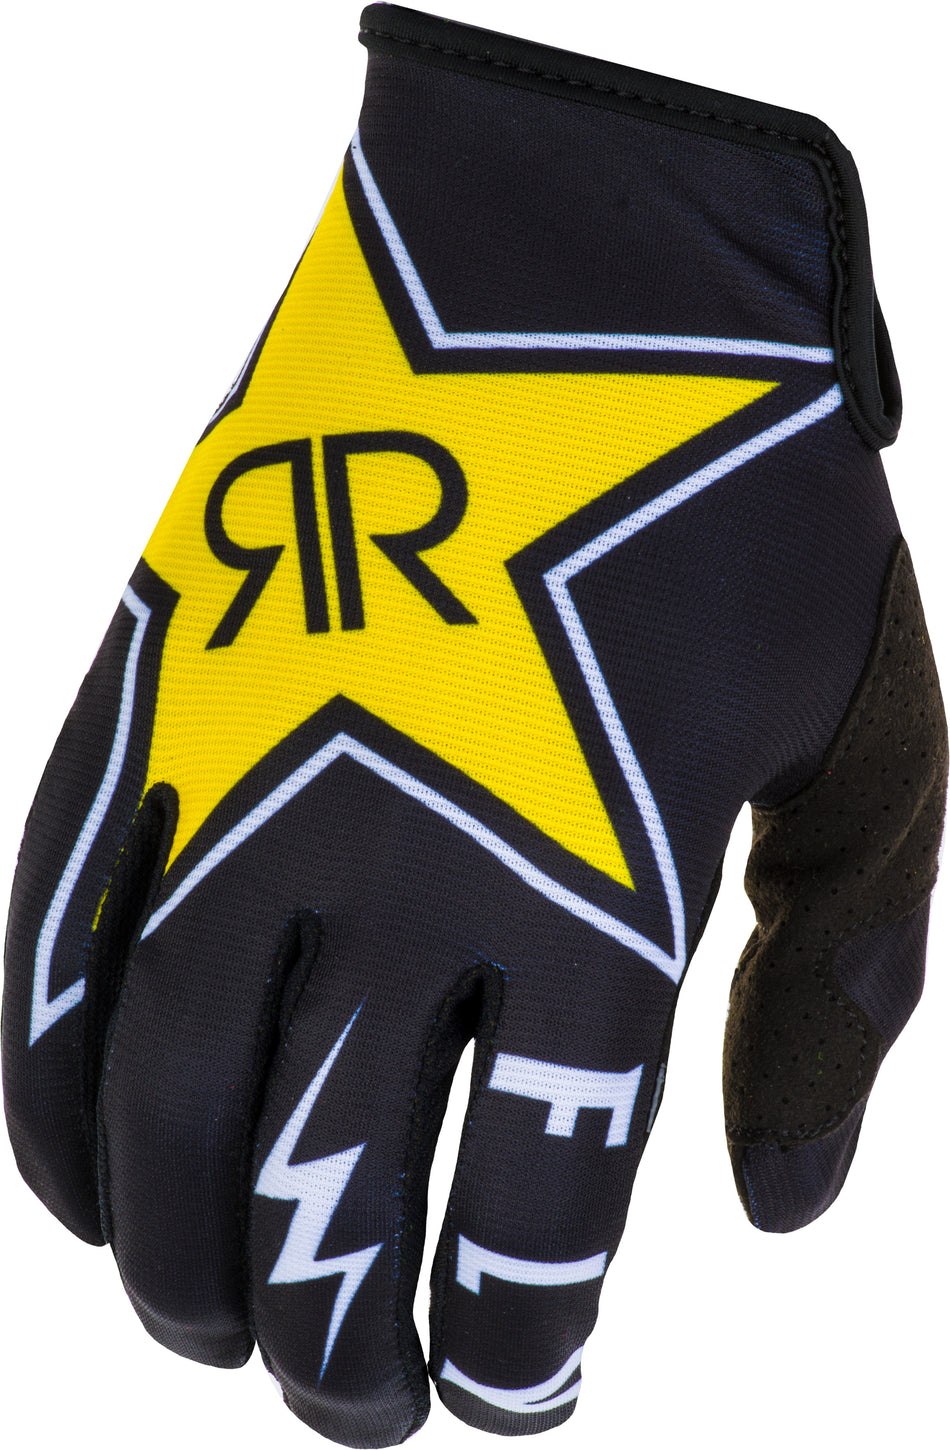 FLY RACING Lite Rockstar Gloves Black/White Sz 08 373-01308